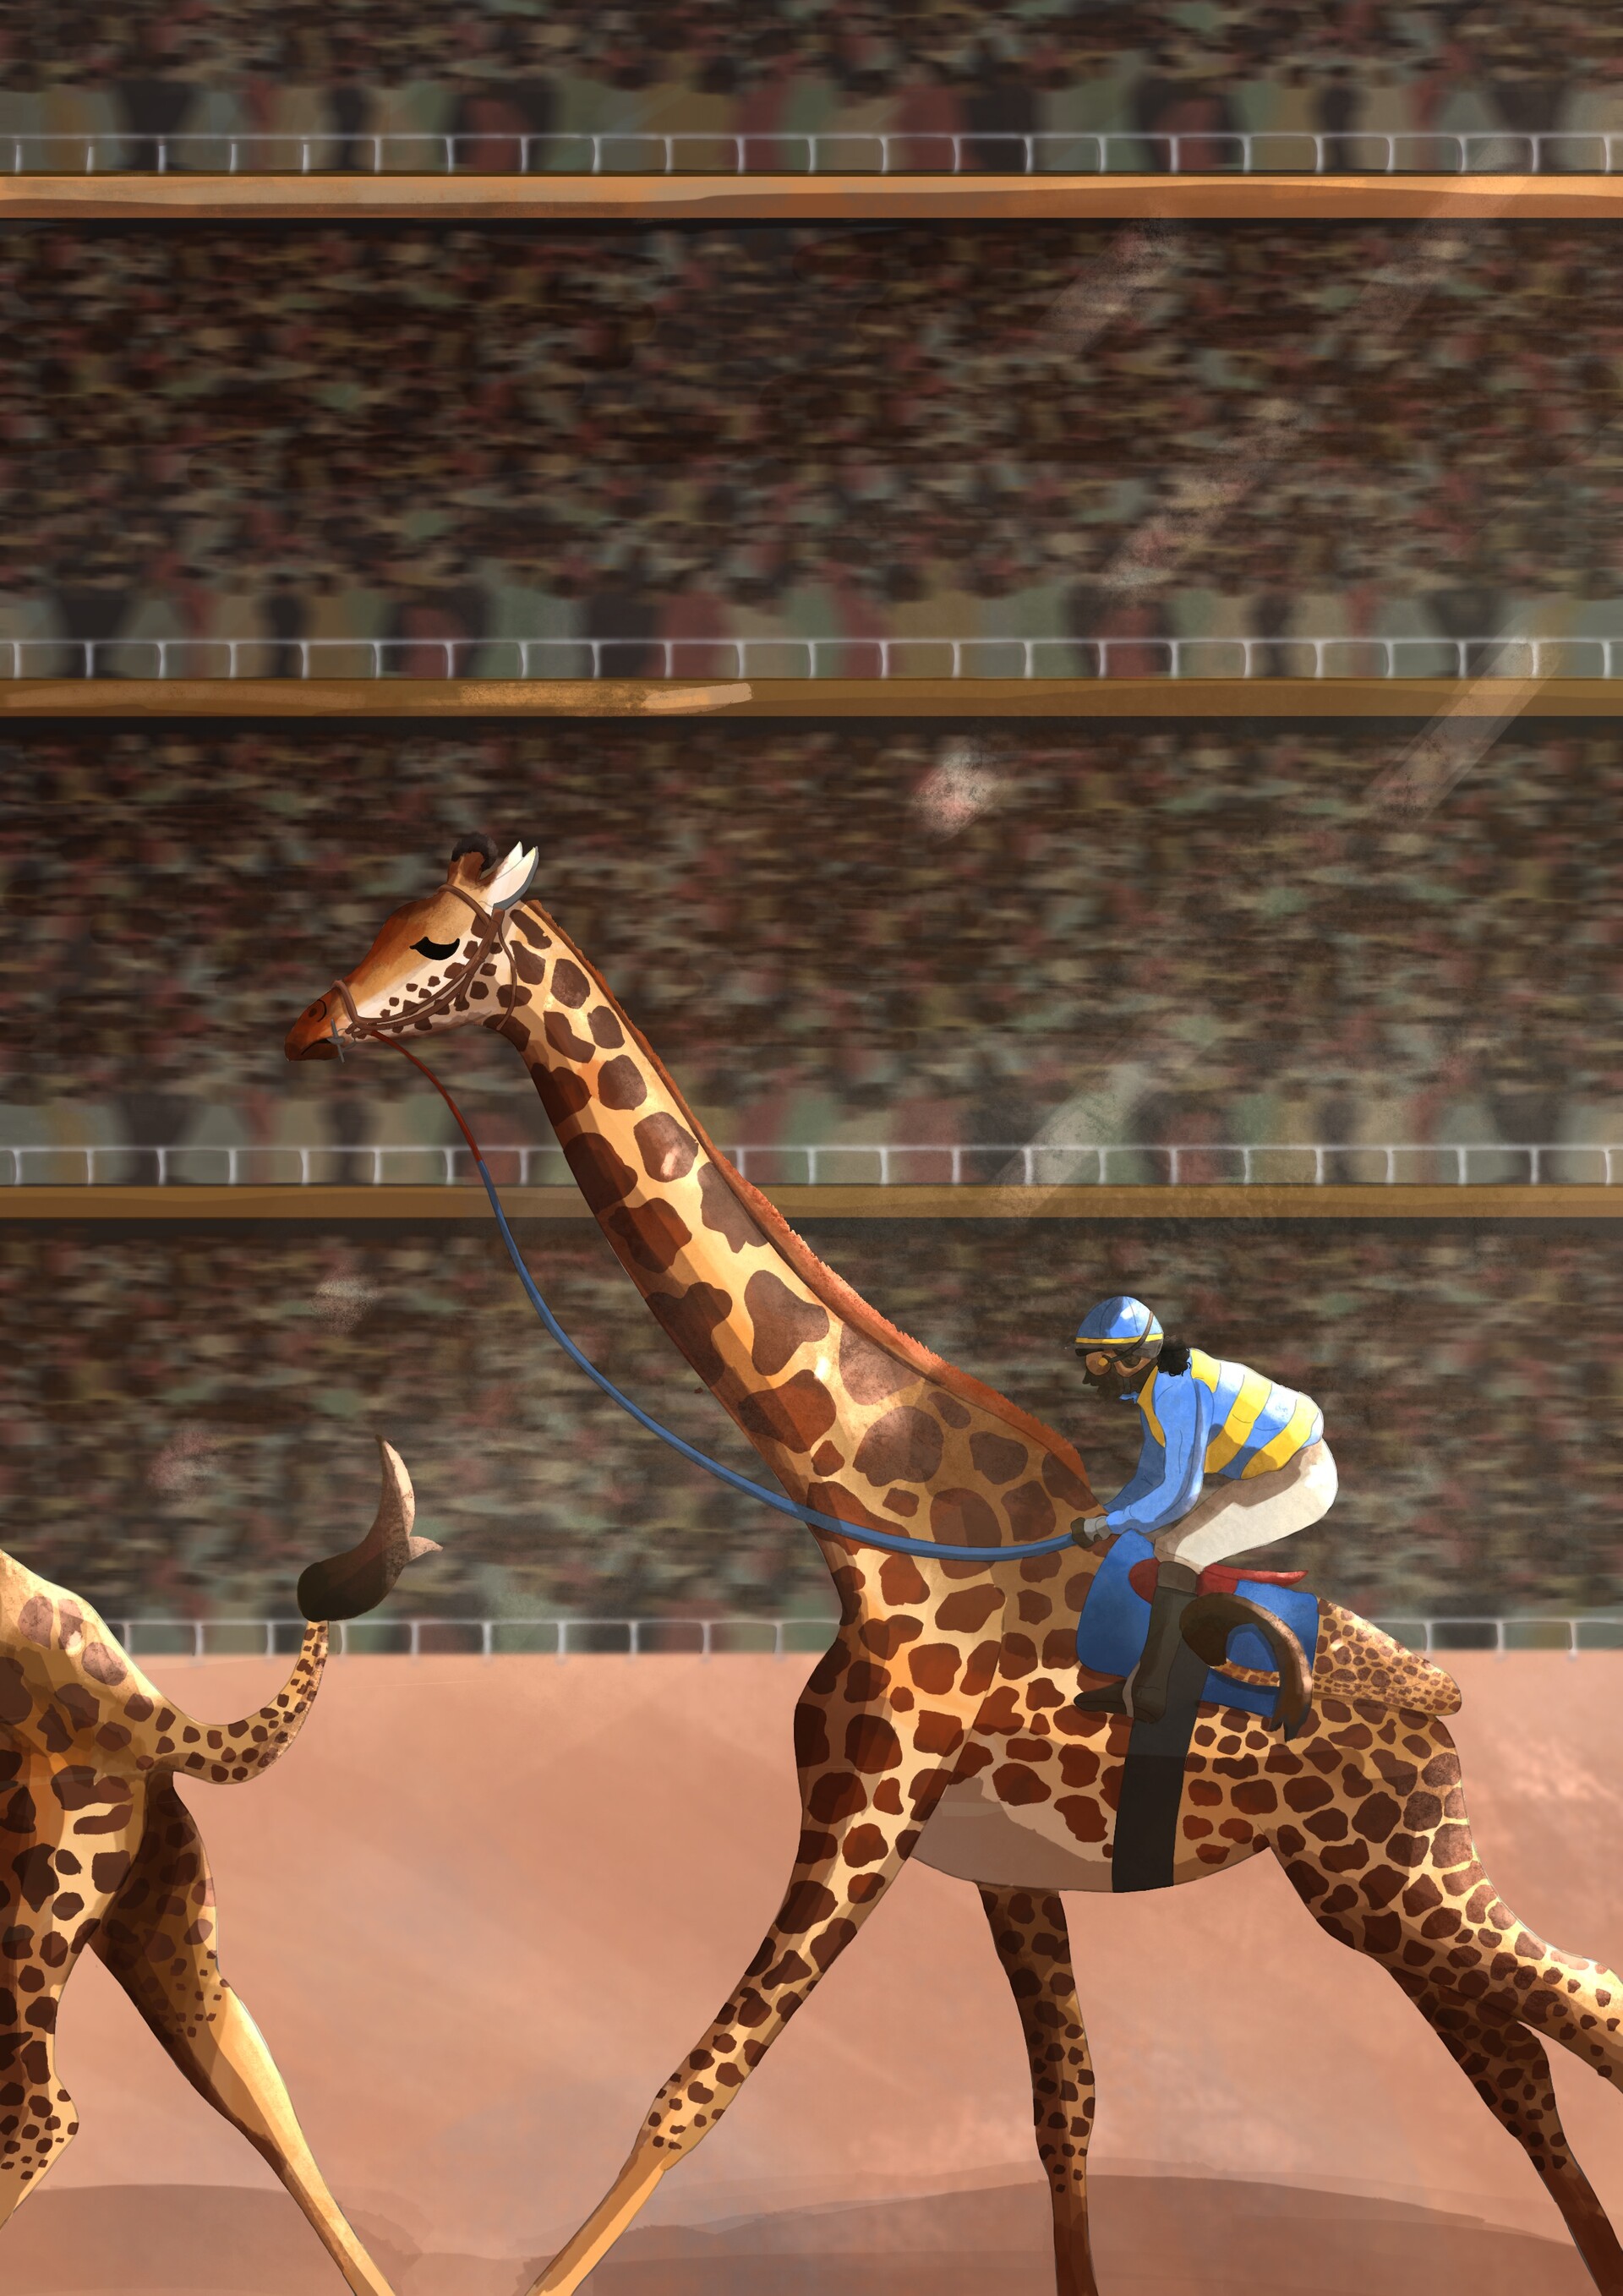 giraffe racing